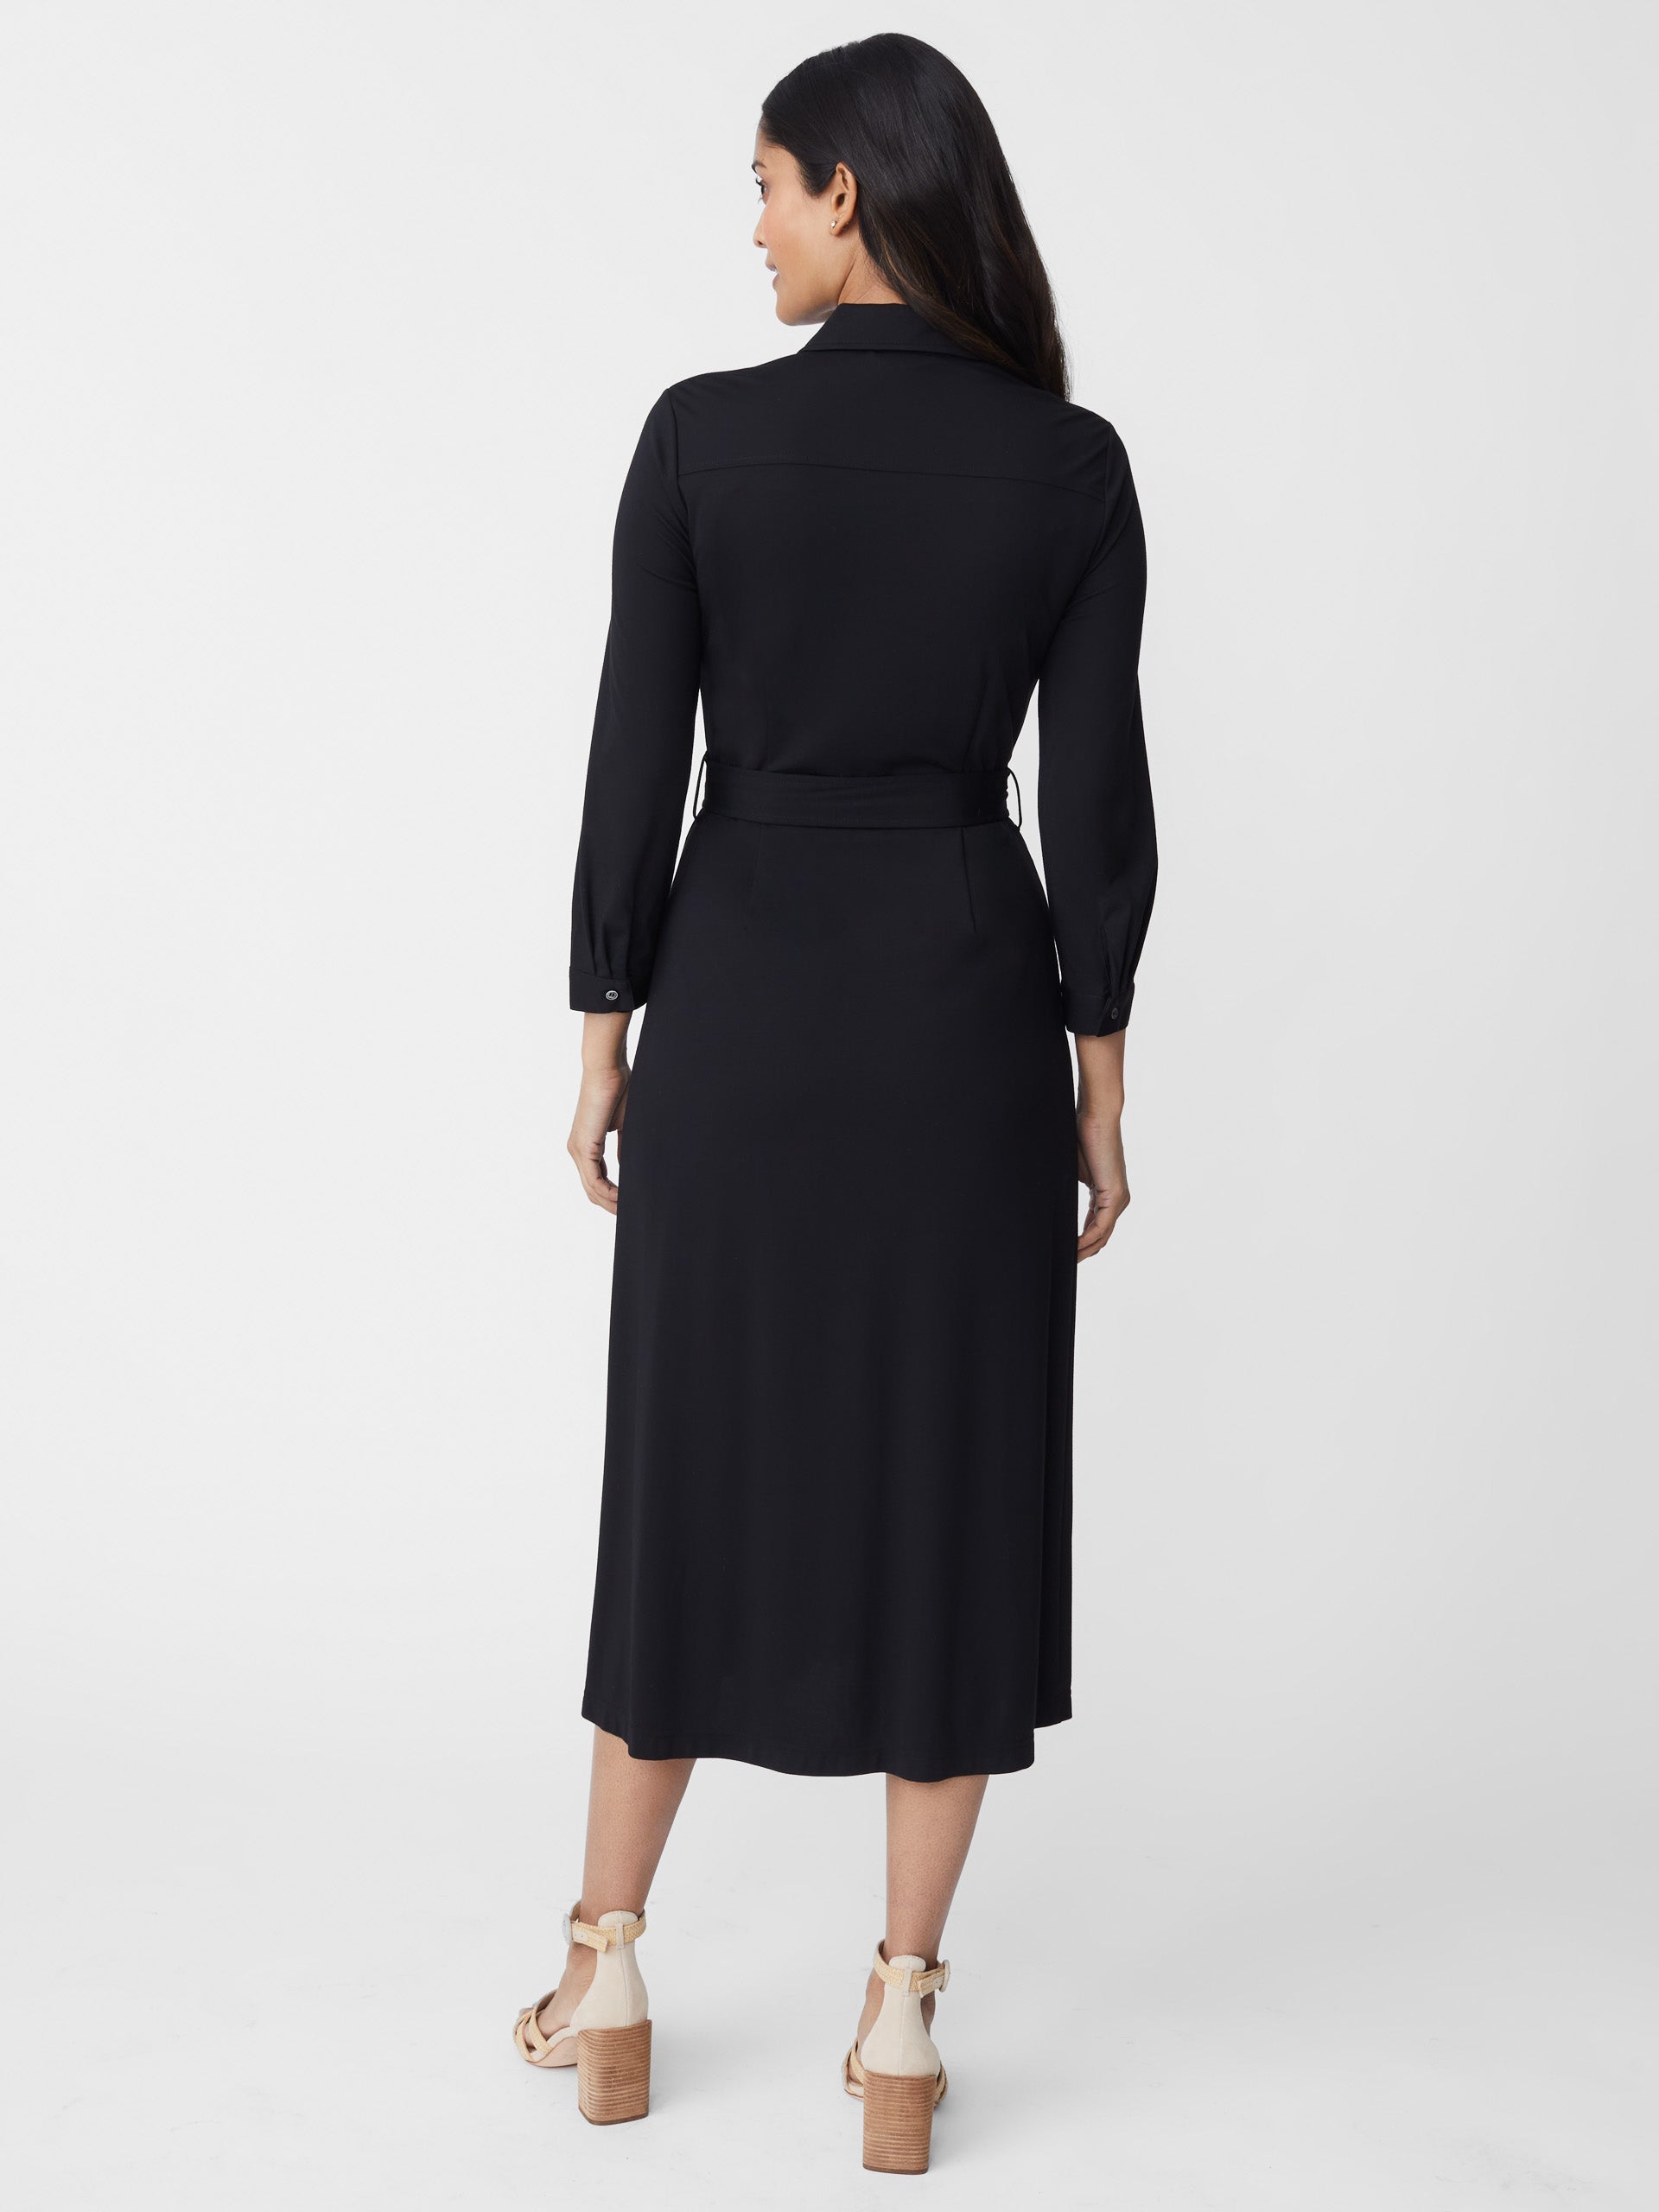 Model wearing J.McLaughlin Pamela dress in black made with raylon/nylon/spandex.